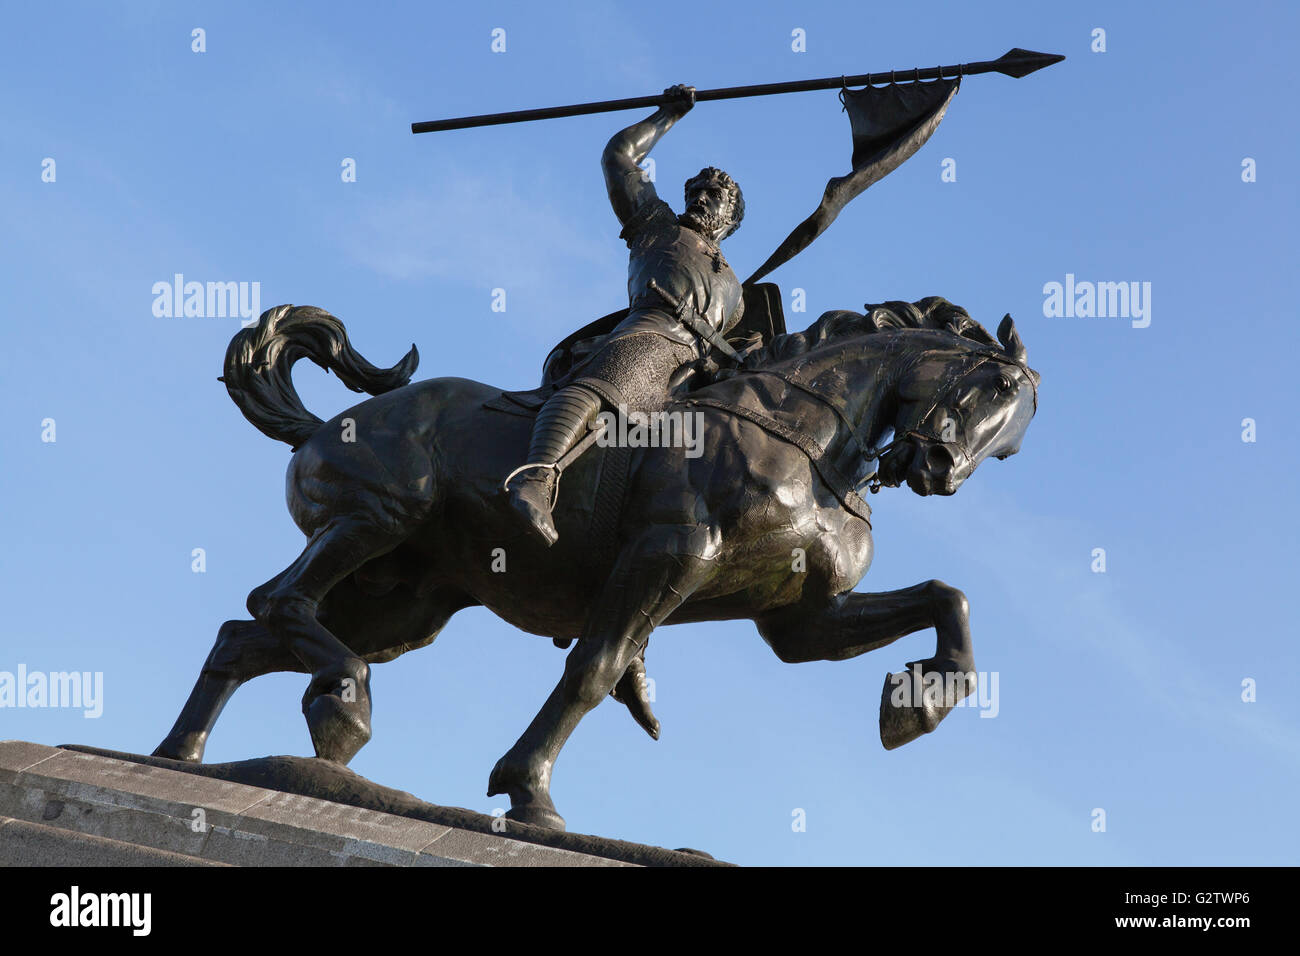 Spagna, Andalusia Siviglia, Statua di Rodrigo Diaz de Vivar conosciuta come El Cid Campeador. Foto Stock